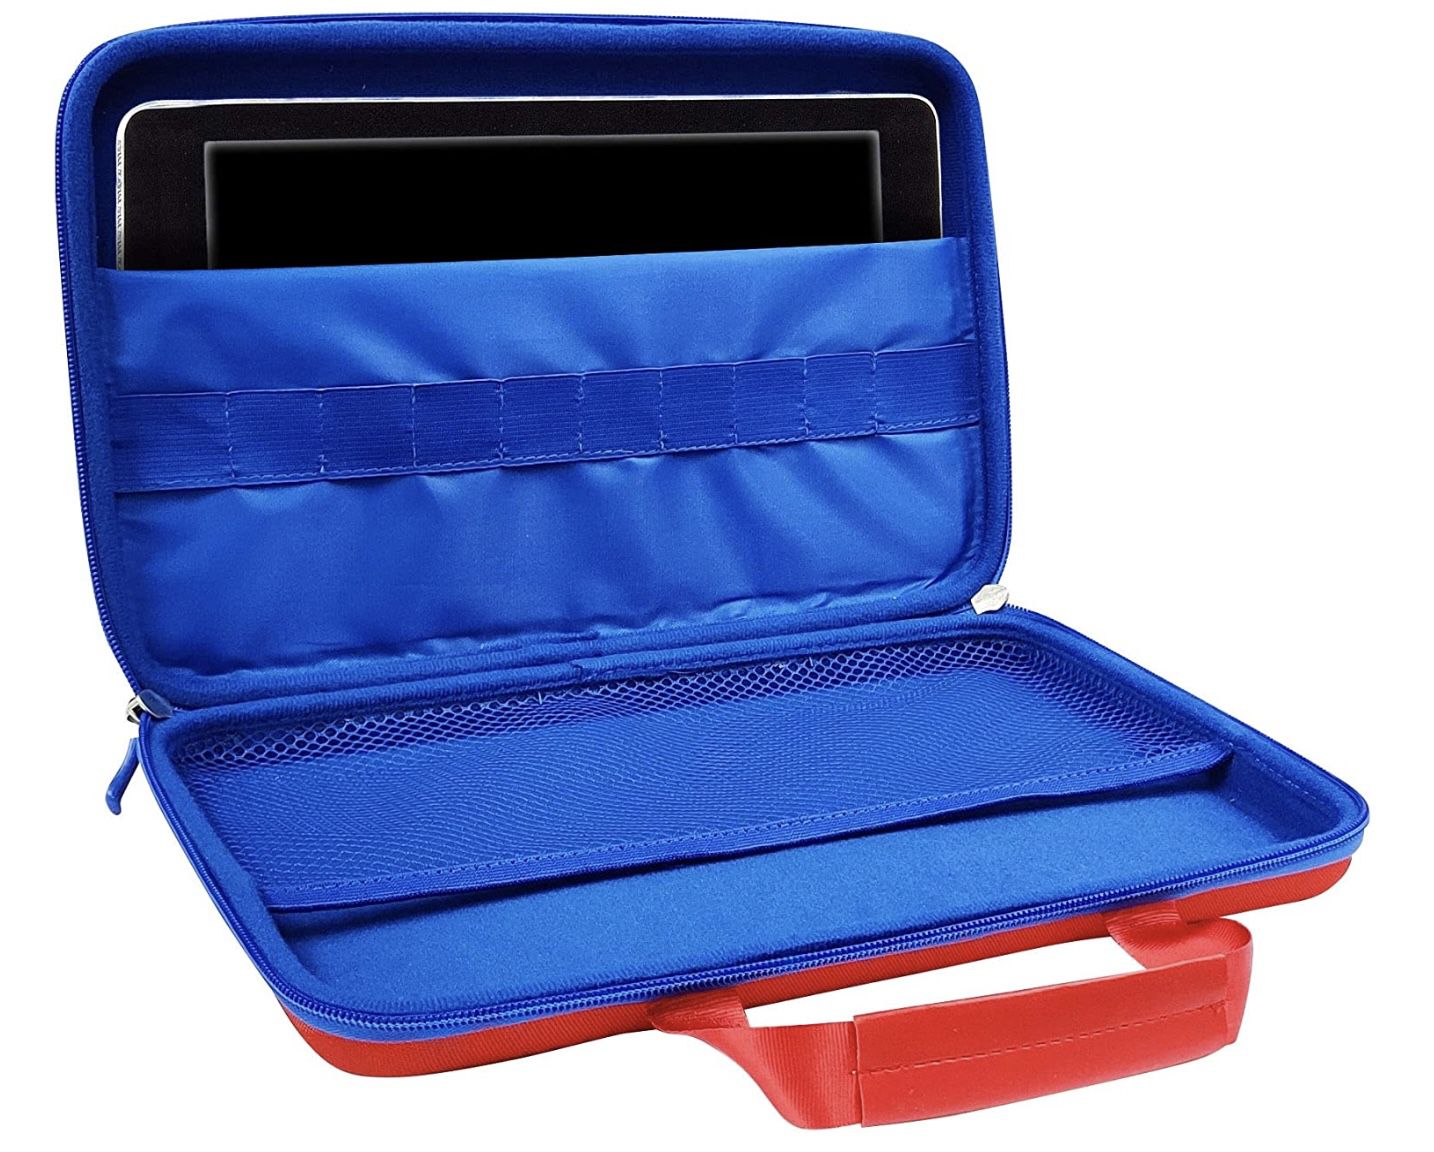 Lexibook MFA50NI Carrying bag   Super Mario für 17,99€ (statt 33€)   Prime